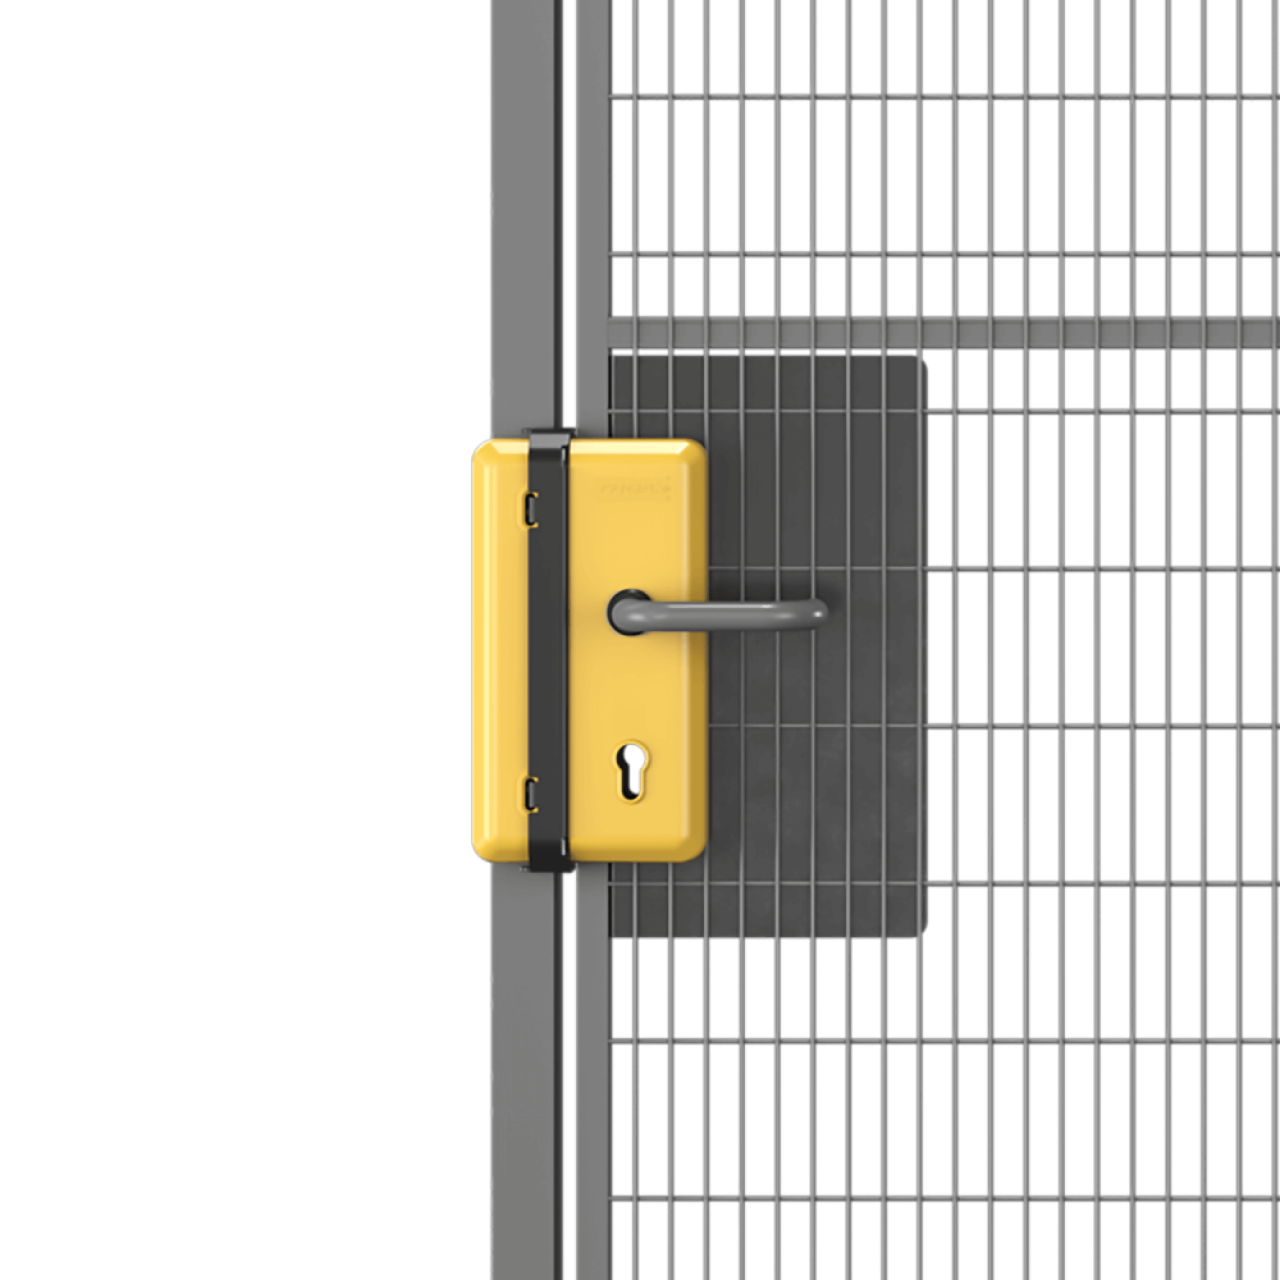 Machine Guarding Euro Cylinder Safety Lock.